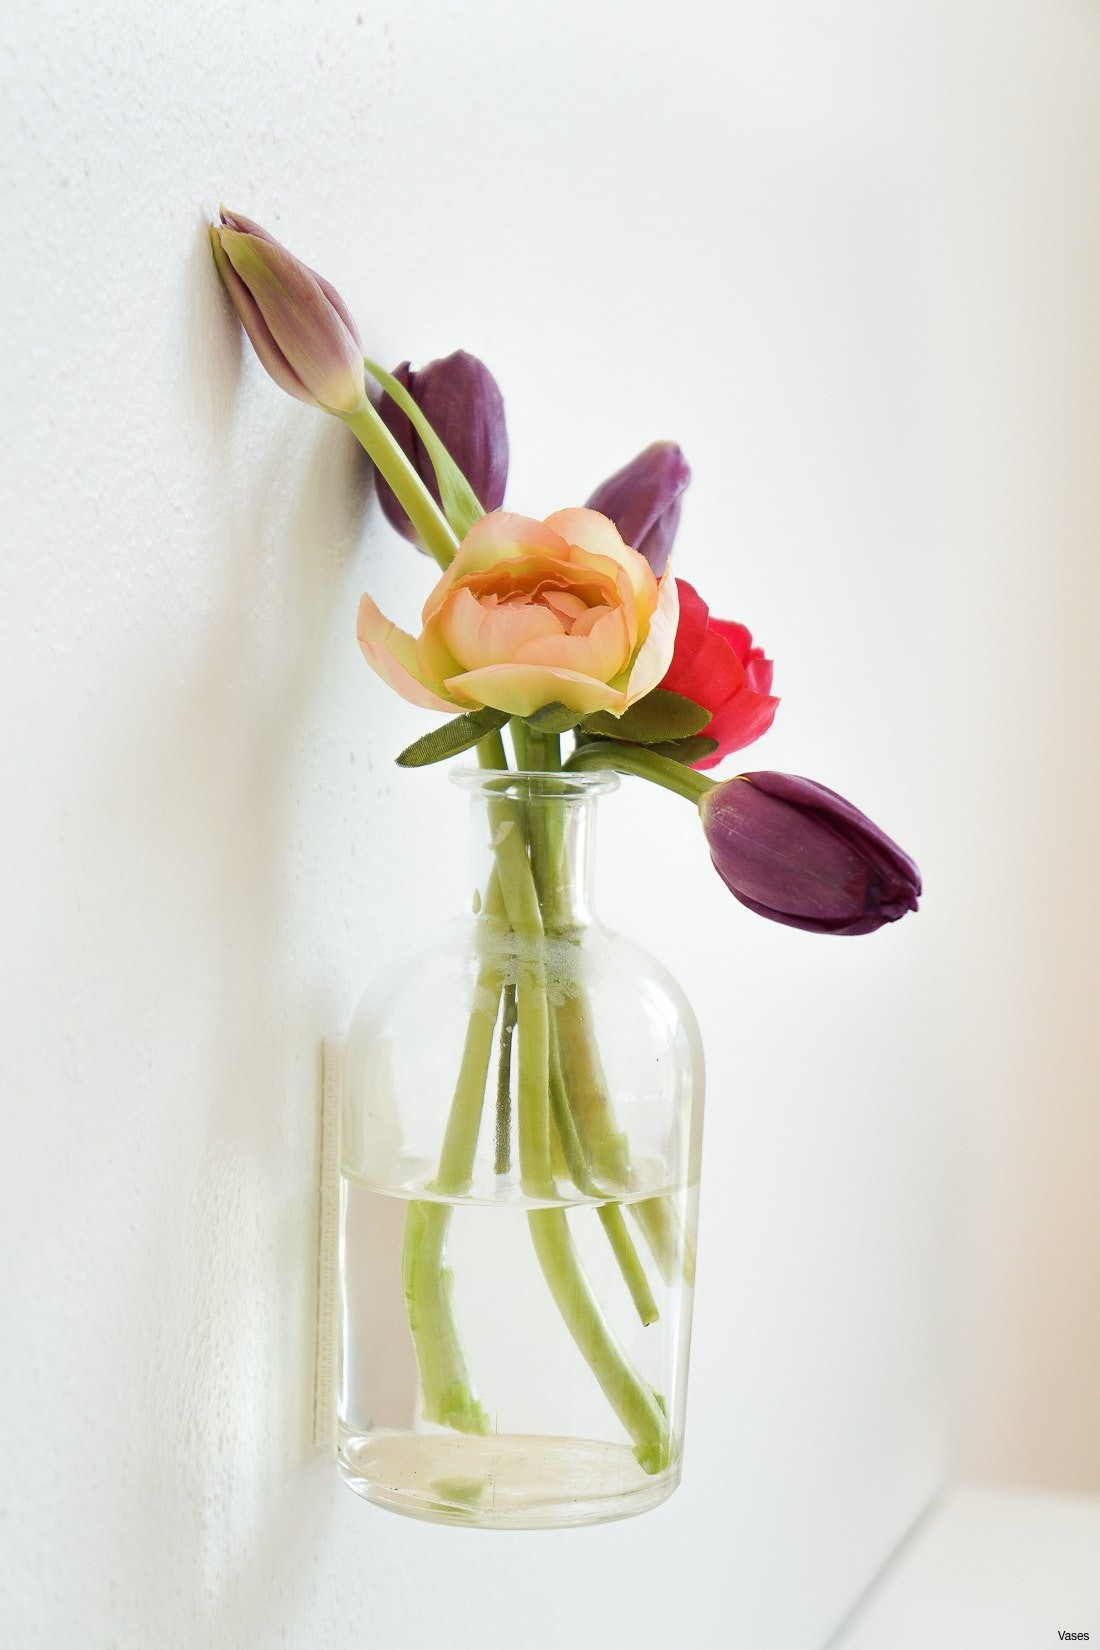 Small Flower Vase Of 10 Best Of Small White Flower Vase Bogekompresorturkiye Com Throughout Il Fullxfull L7e9h Vases Wall Flower Vase Zoomi 0d Decor Inspiration Scheme Beautiful Flower Bouquet